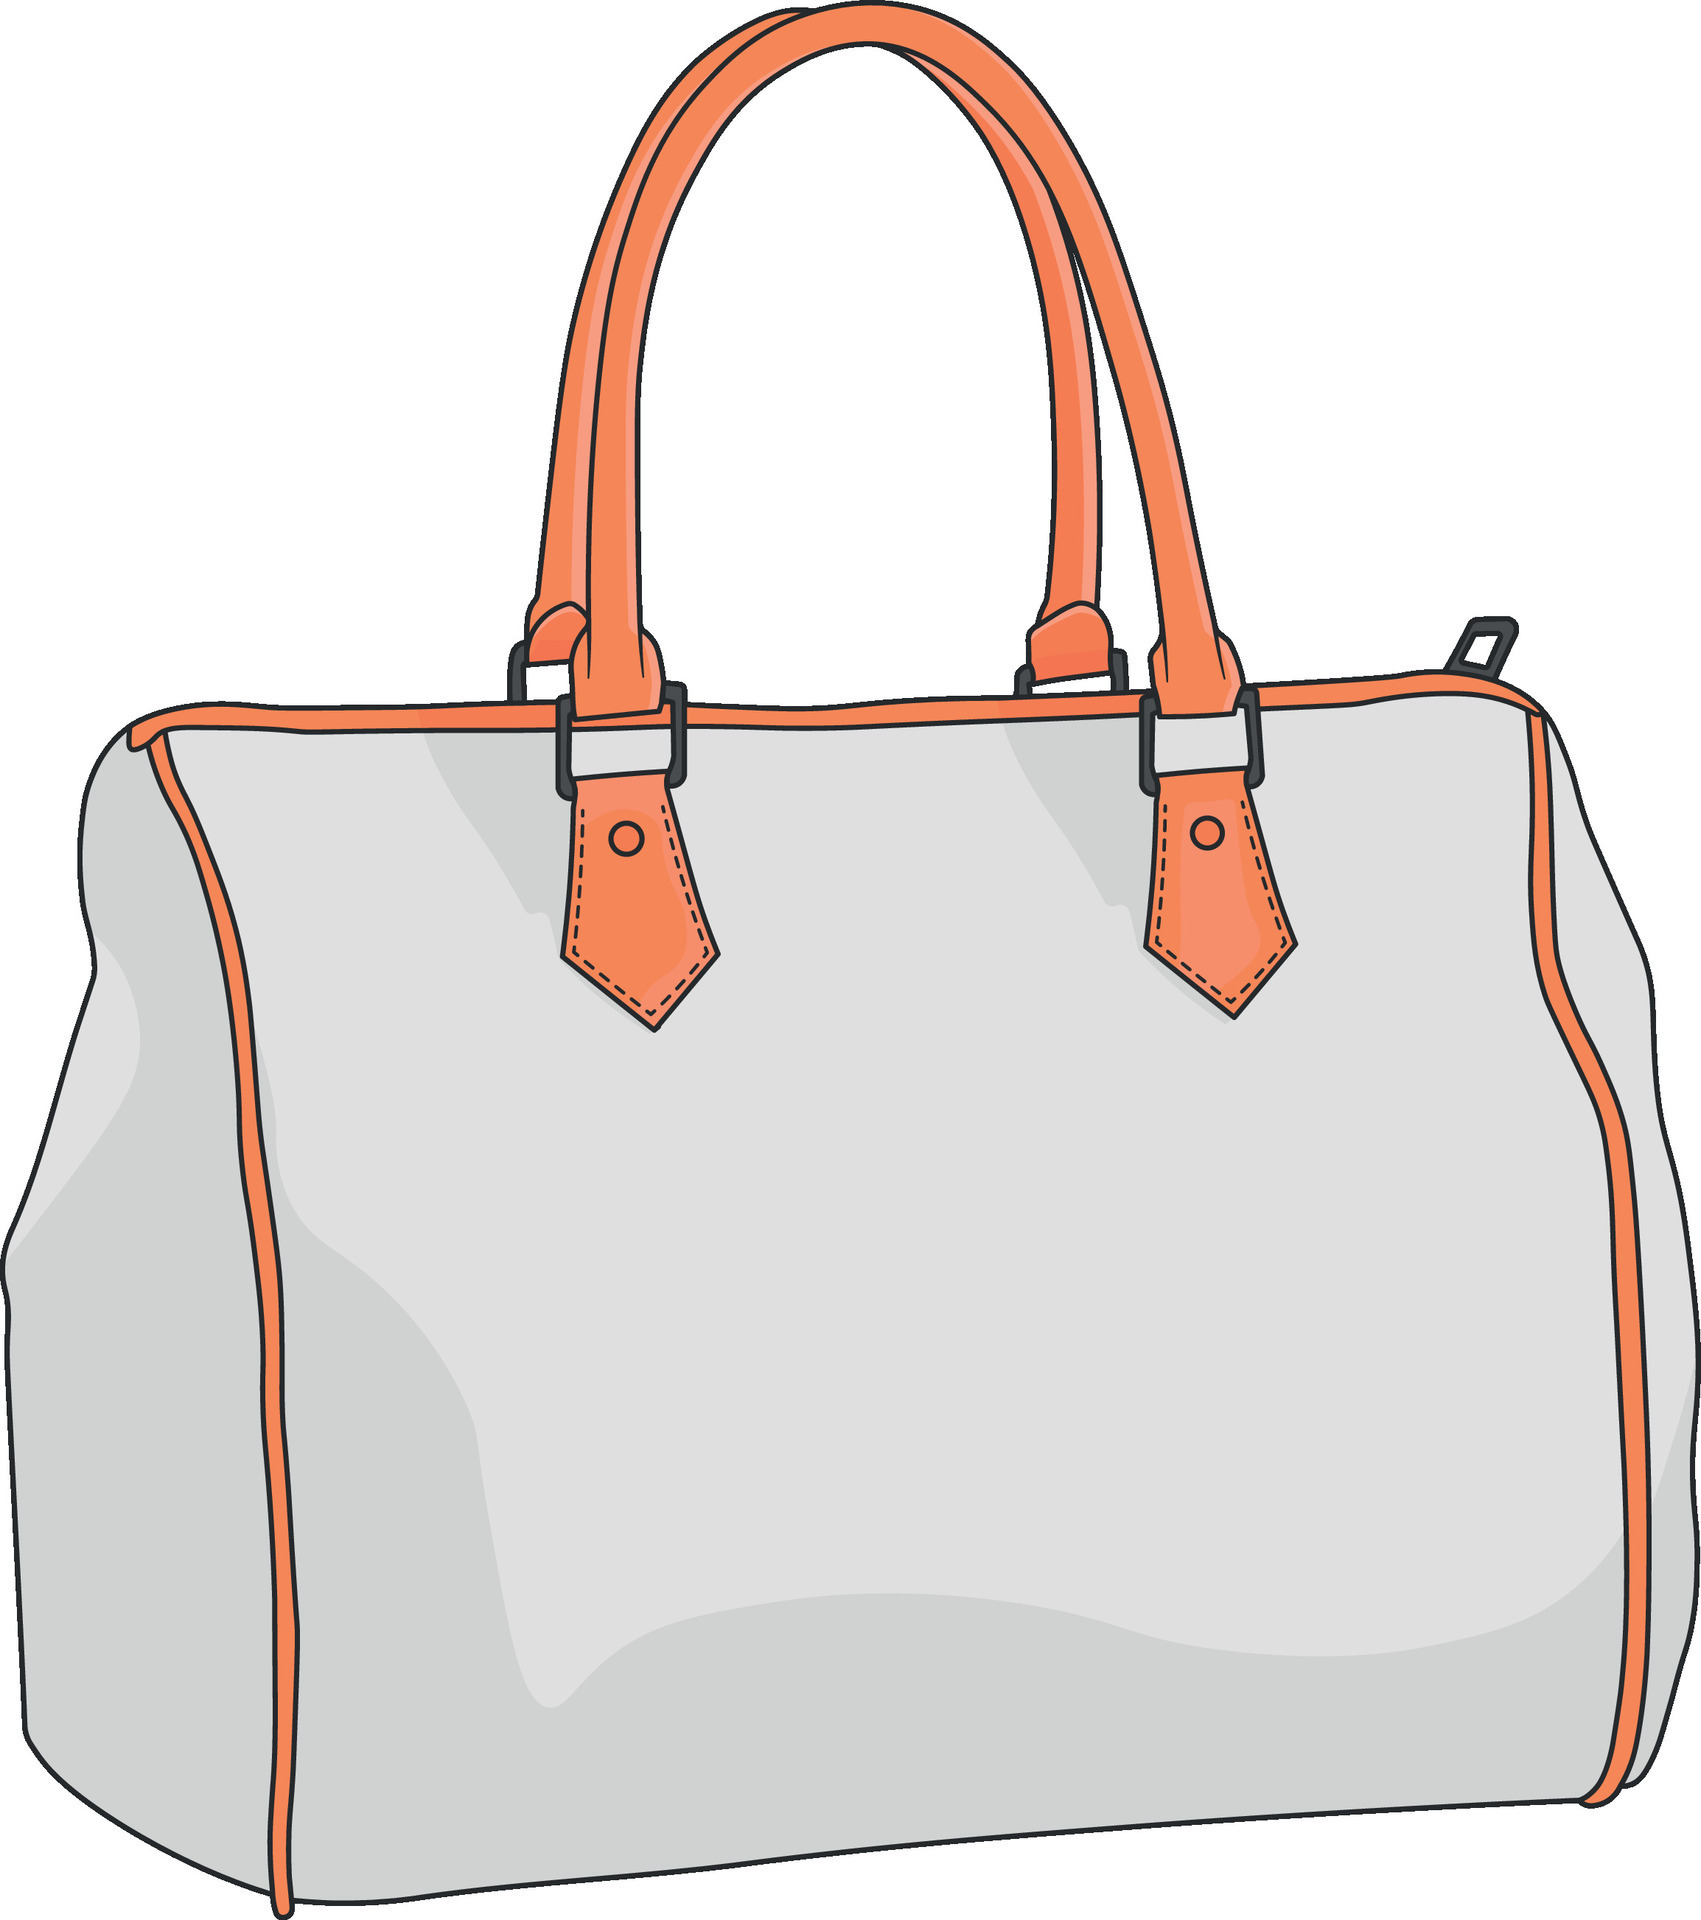 illustration of a bag, handbag, clutch no background 37073532 Vector ...